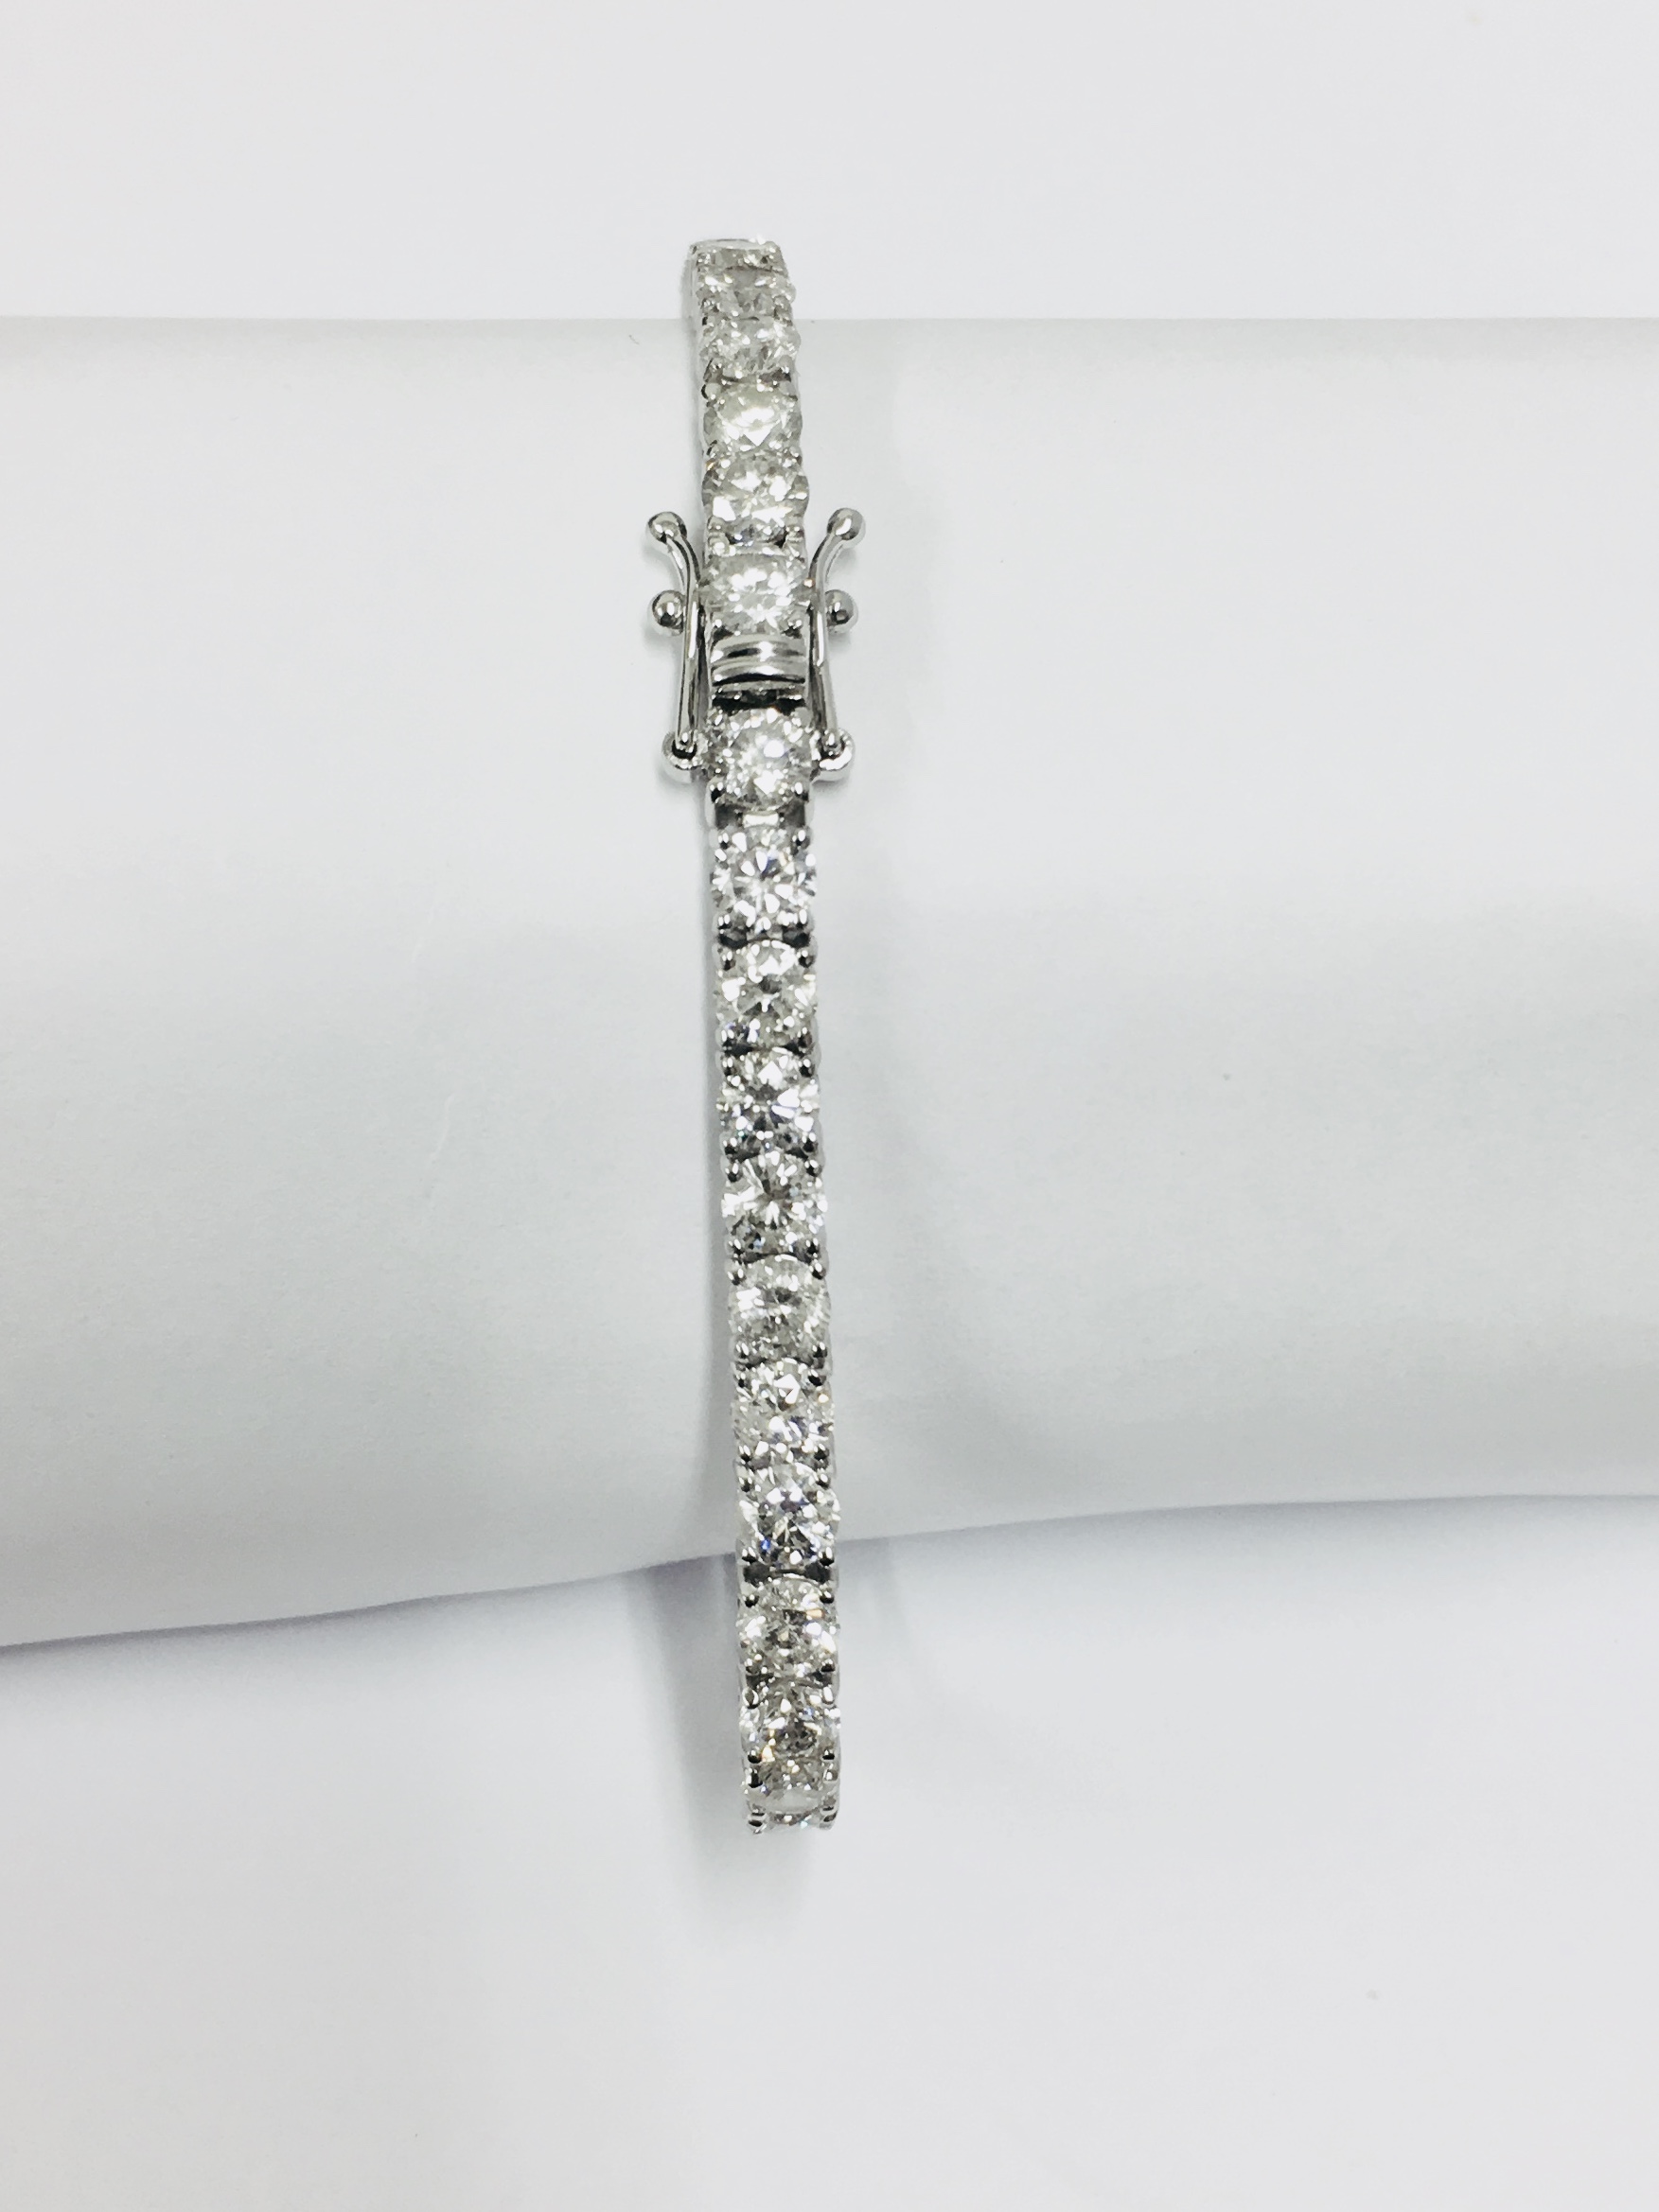 8.00ct Diamond tennis bracelet set with brilliant cut diamonds of G colour - Image 3 of 42